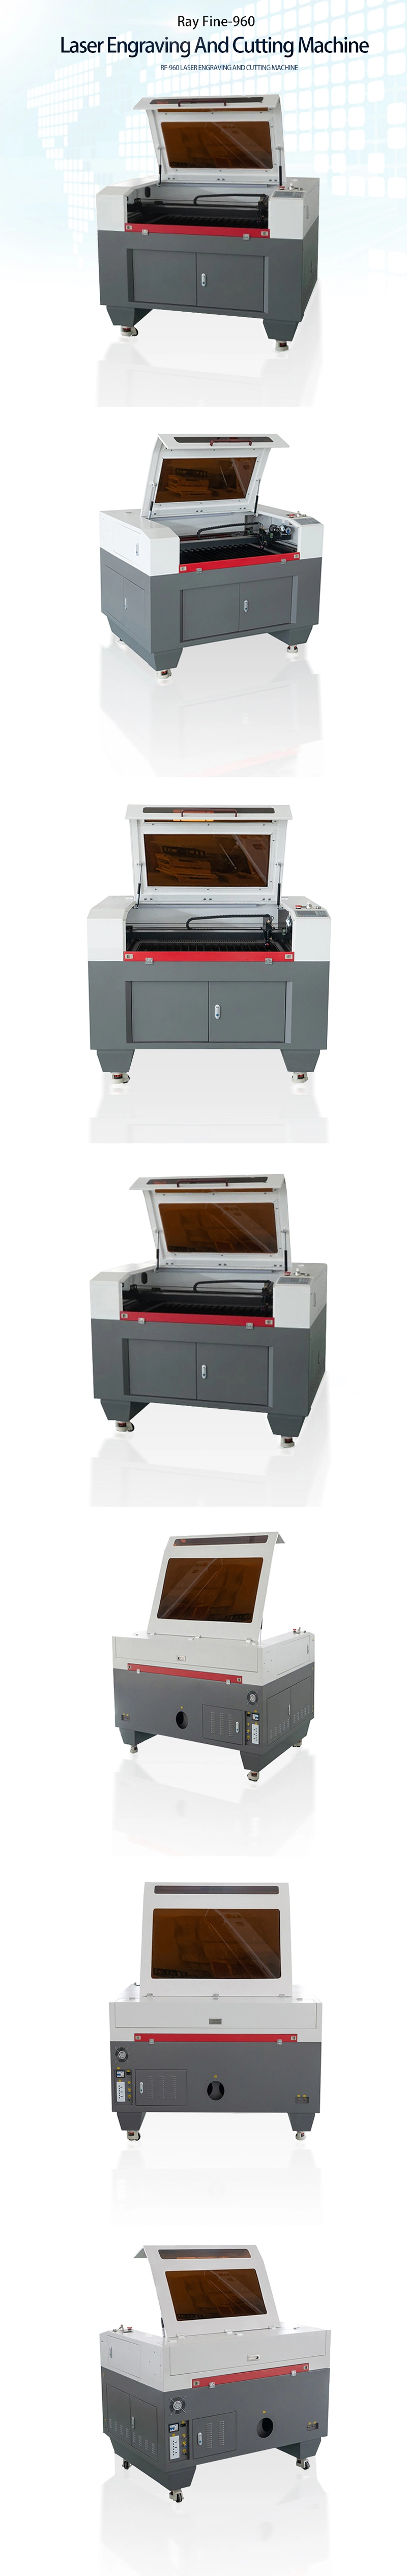 Laser Engraving Machine CO2 9060 Laser Cutting Machine for Non Metal Materials 6090 Laser Engraver